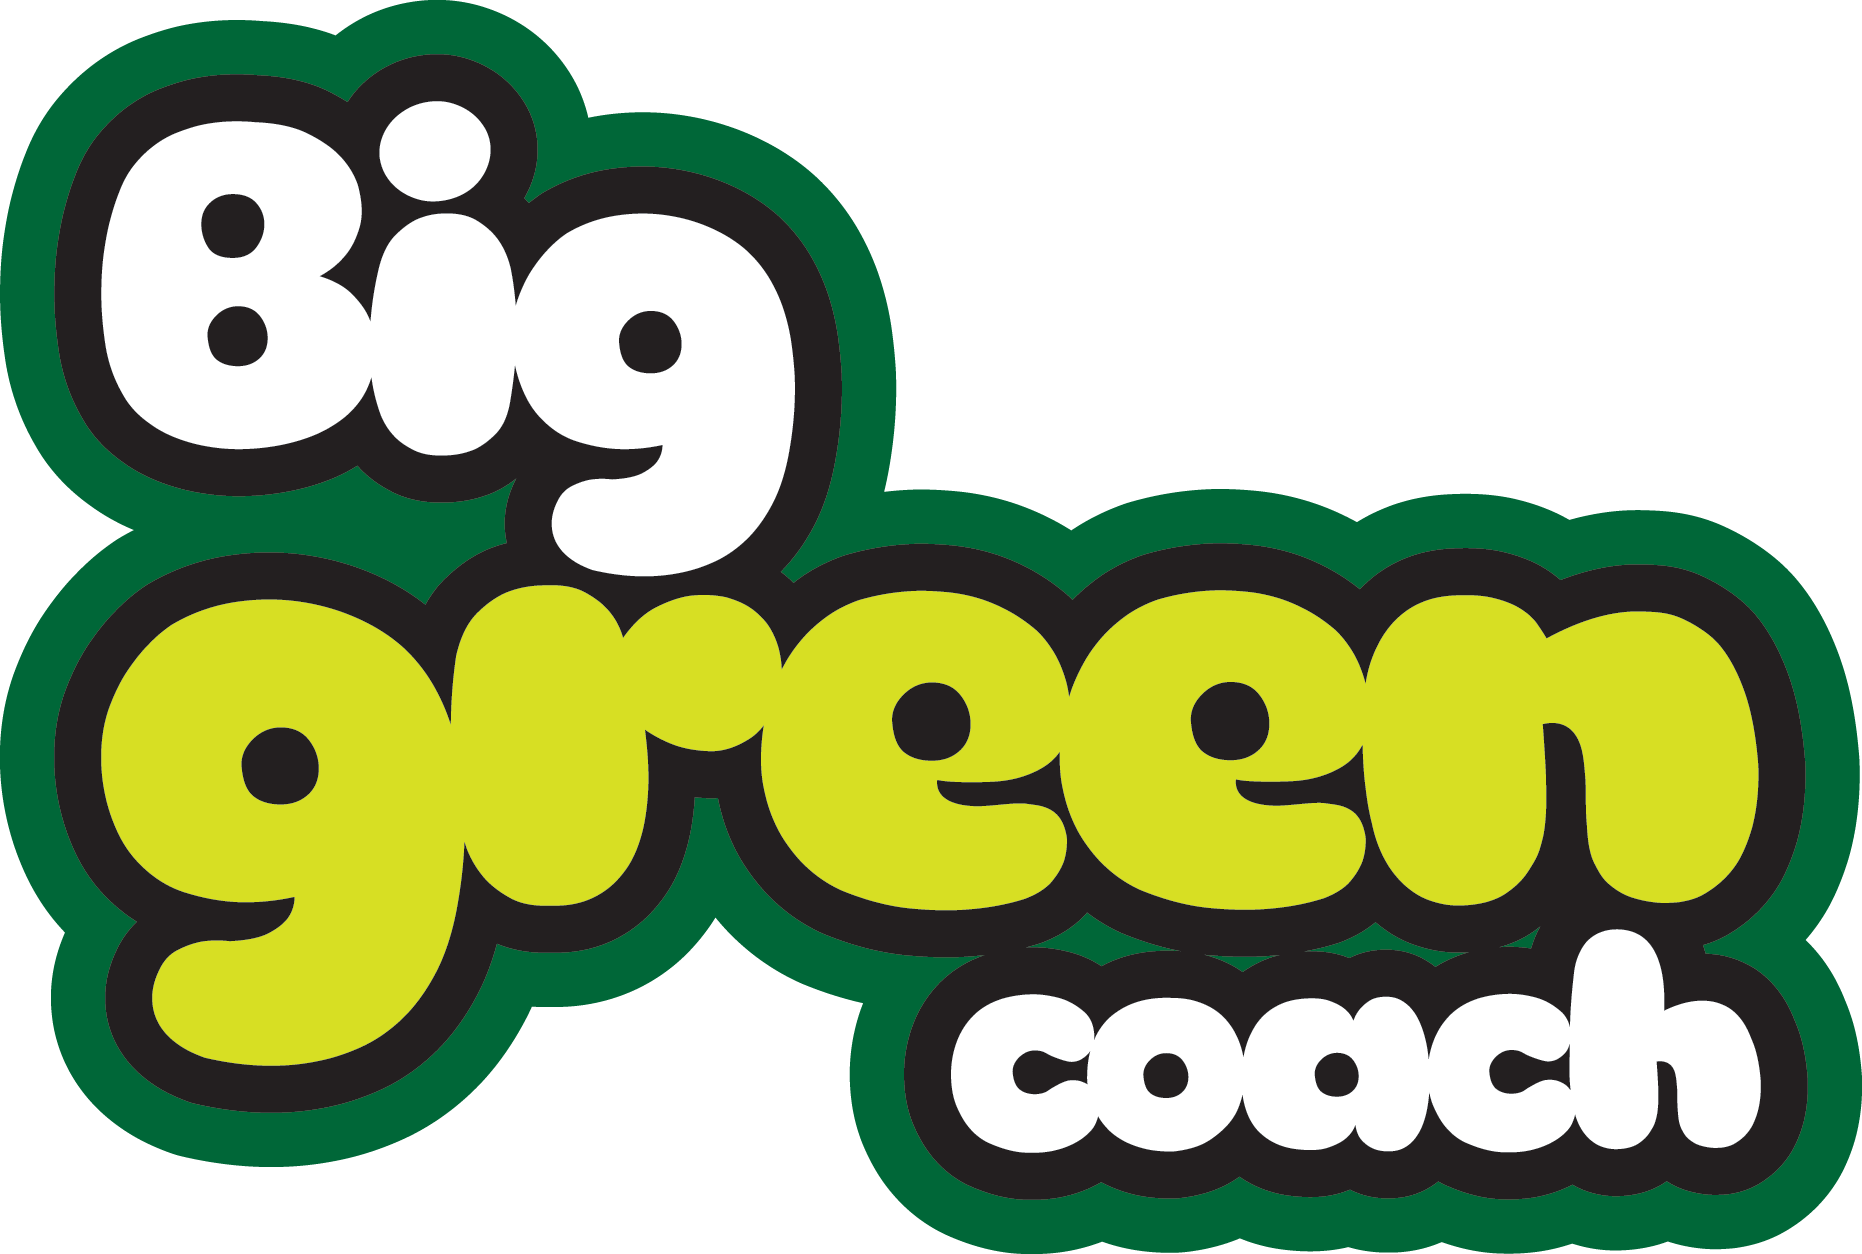 Big Green Coach